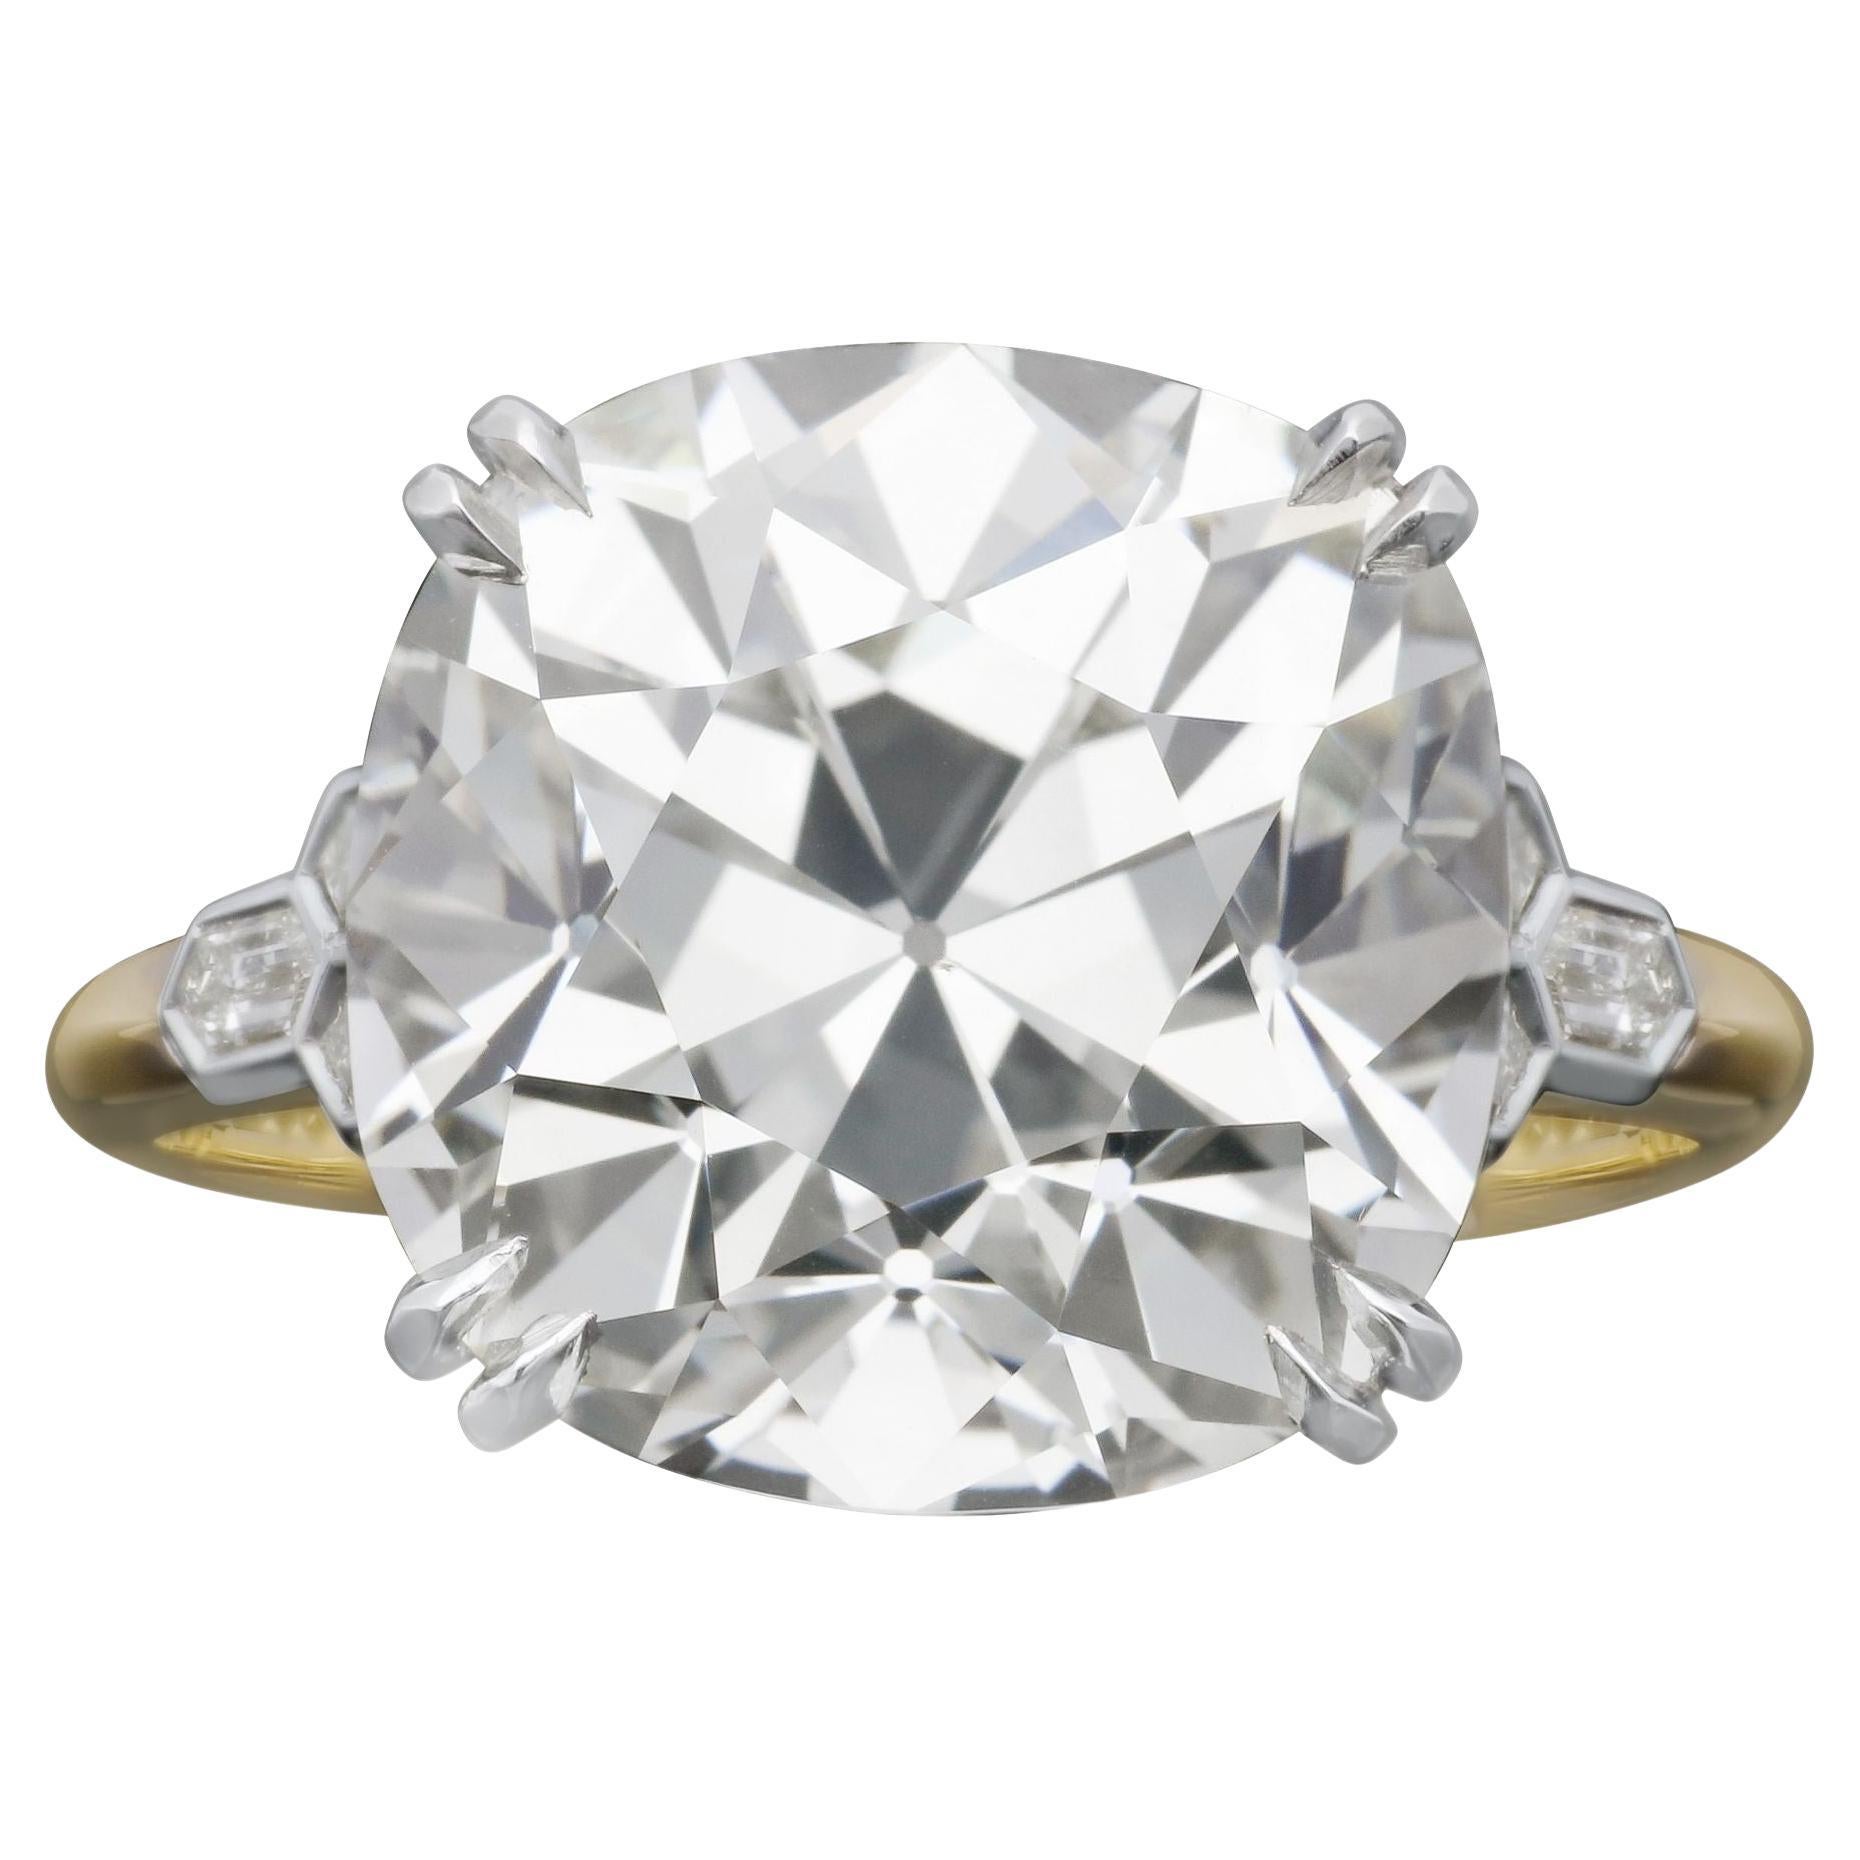 Hancocks 8.46ct Old Mine Brilliant Cut Diamond Ring with Honeycomb Shoulders